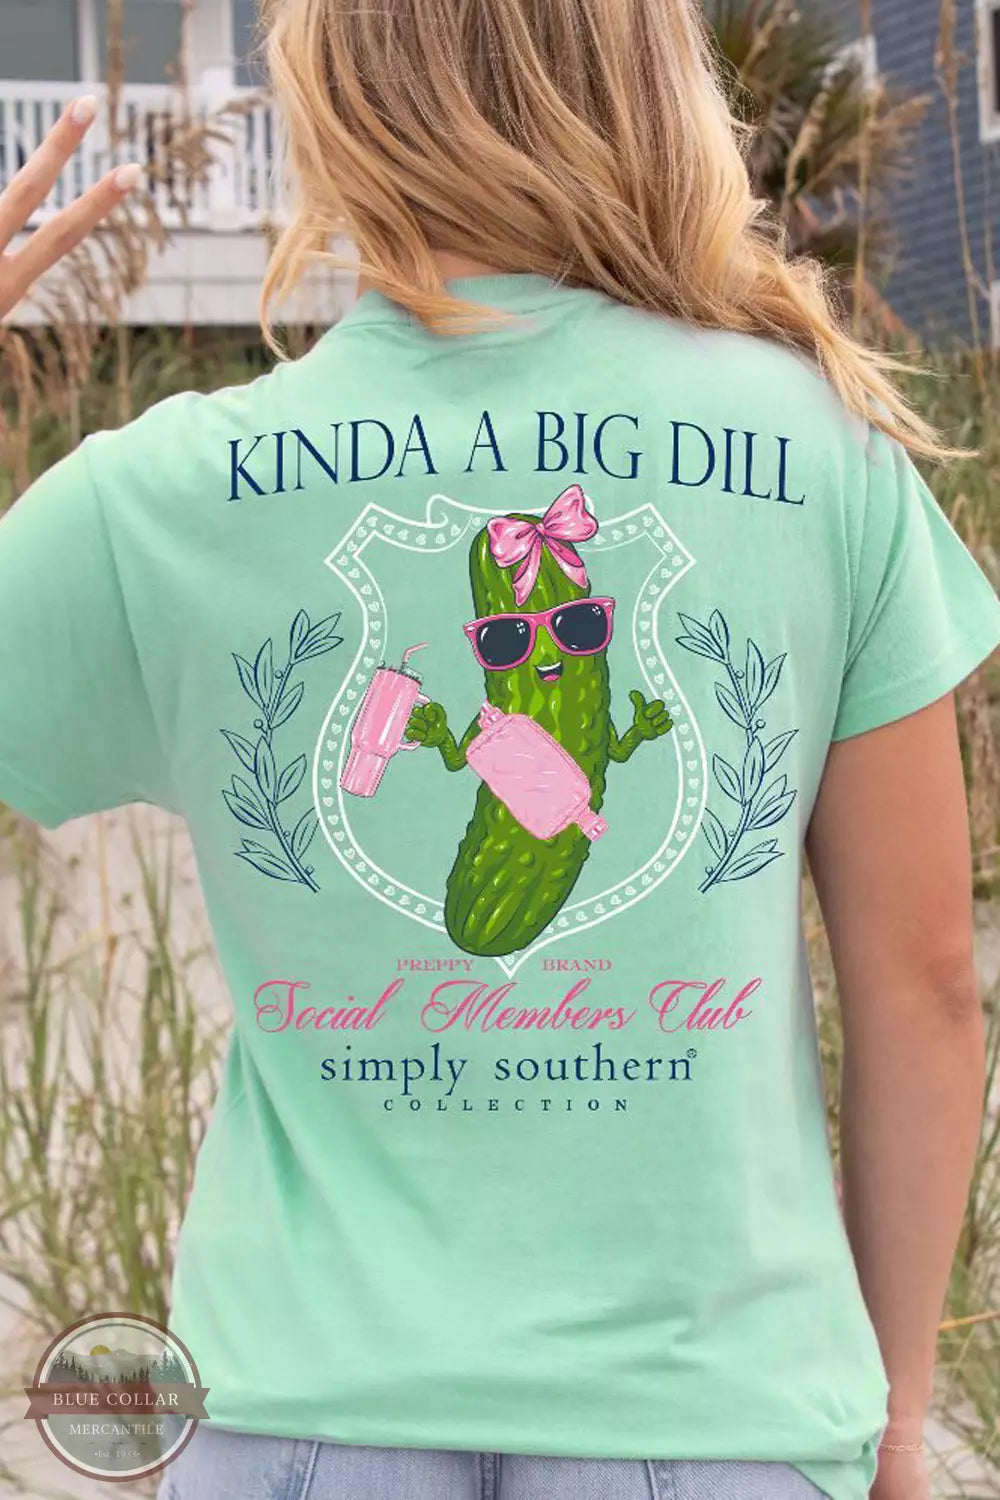 Simply Southern SS-BIGDILL-SEA Kinda a Big Dill T-Shirt Life View